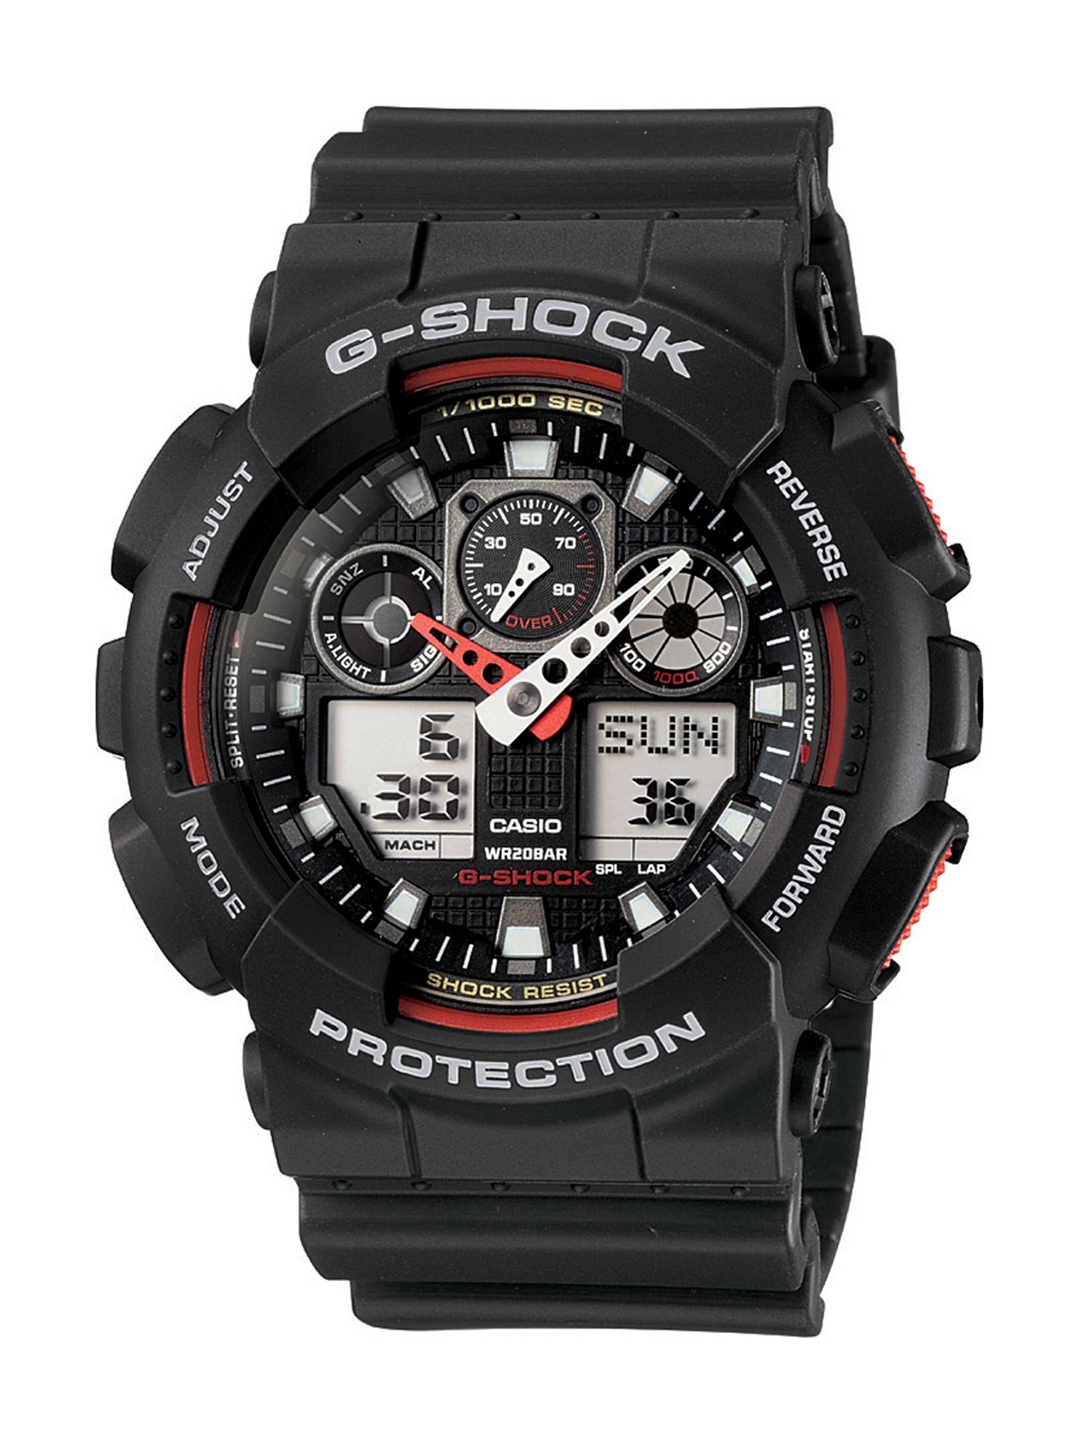 Casio G Shock Men Black Analogue and Digital watch G272 GA 100 1A4DR